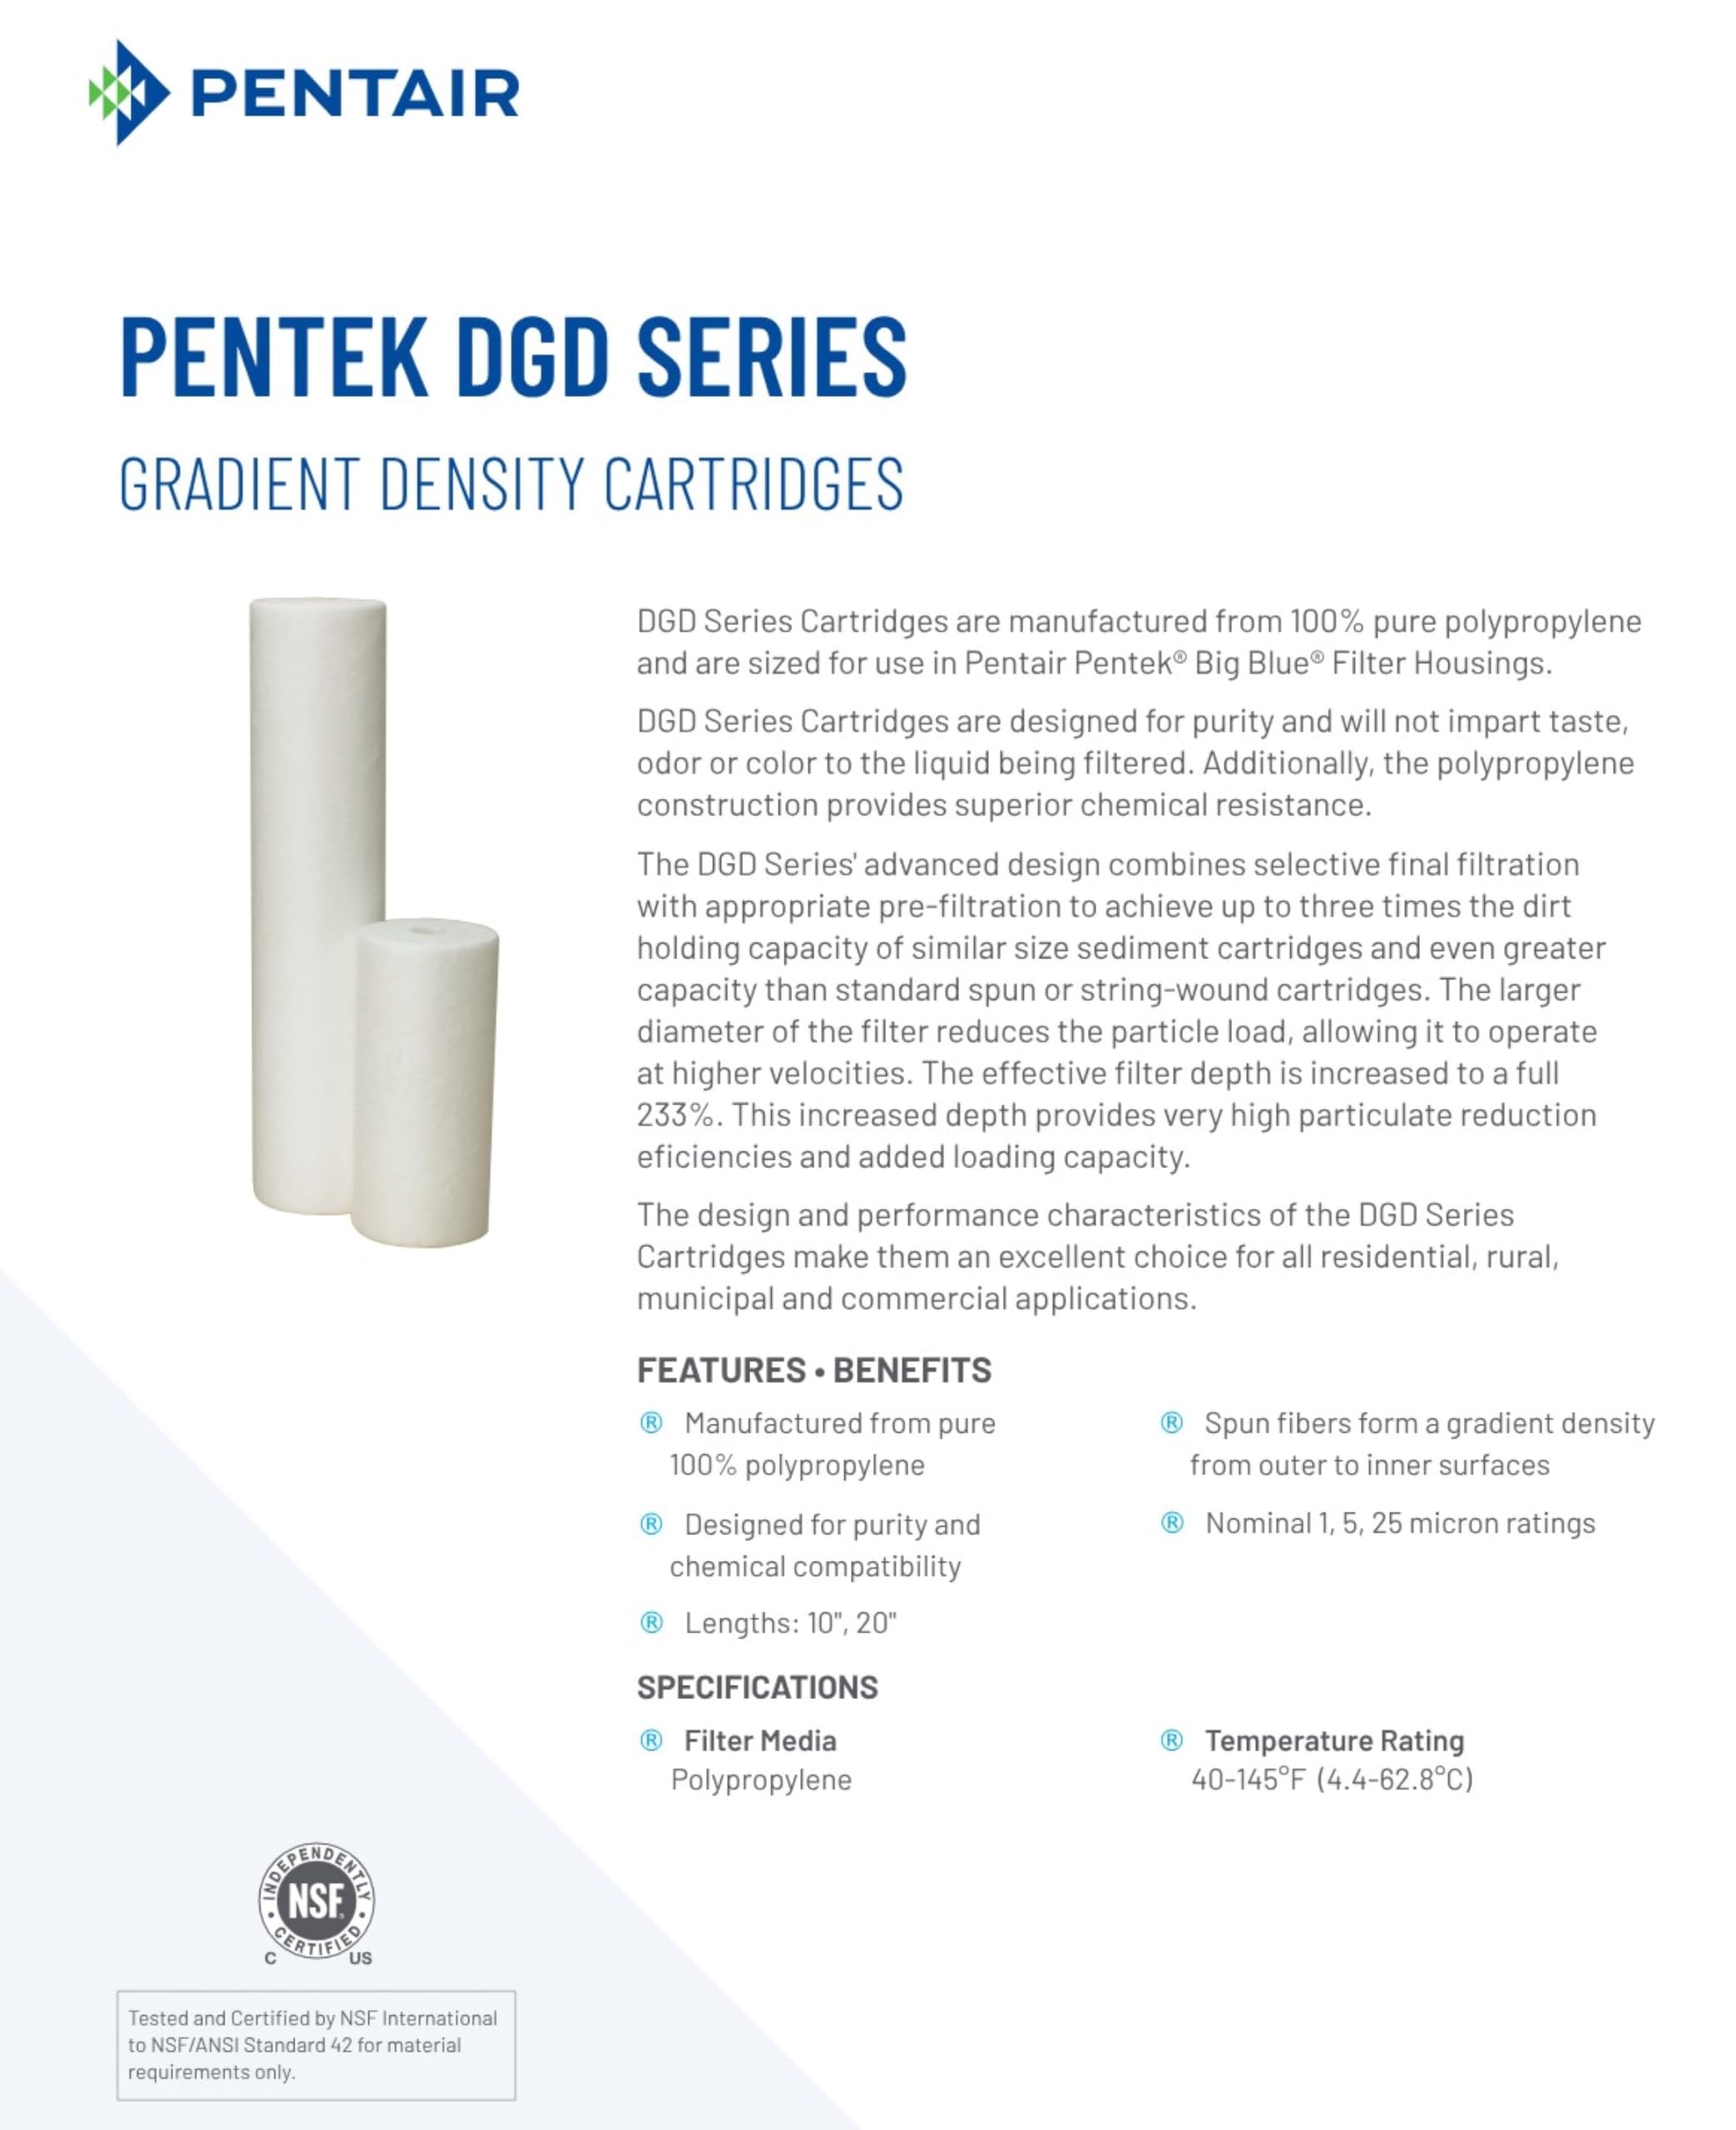 Pentair Pentek DGD-5005 Big Blue Water Filter, 10-Inch Whole House Sediment Filter Cartridge Replacement, Dual-Gradient Density Spun Polypropylene, 10